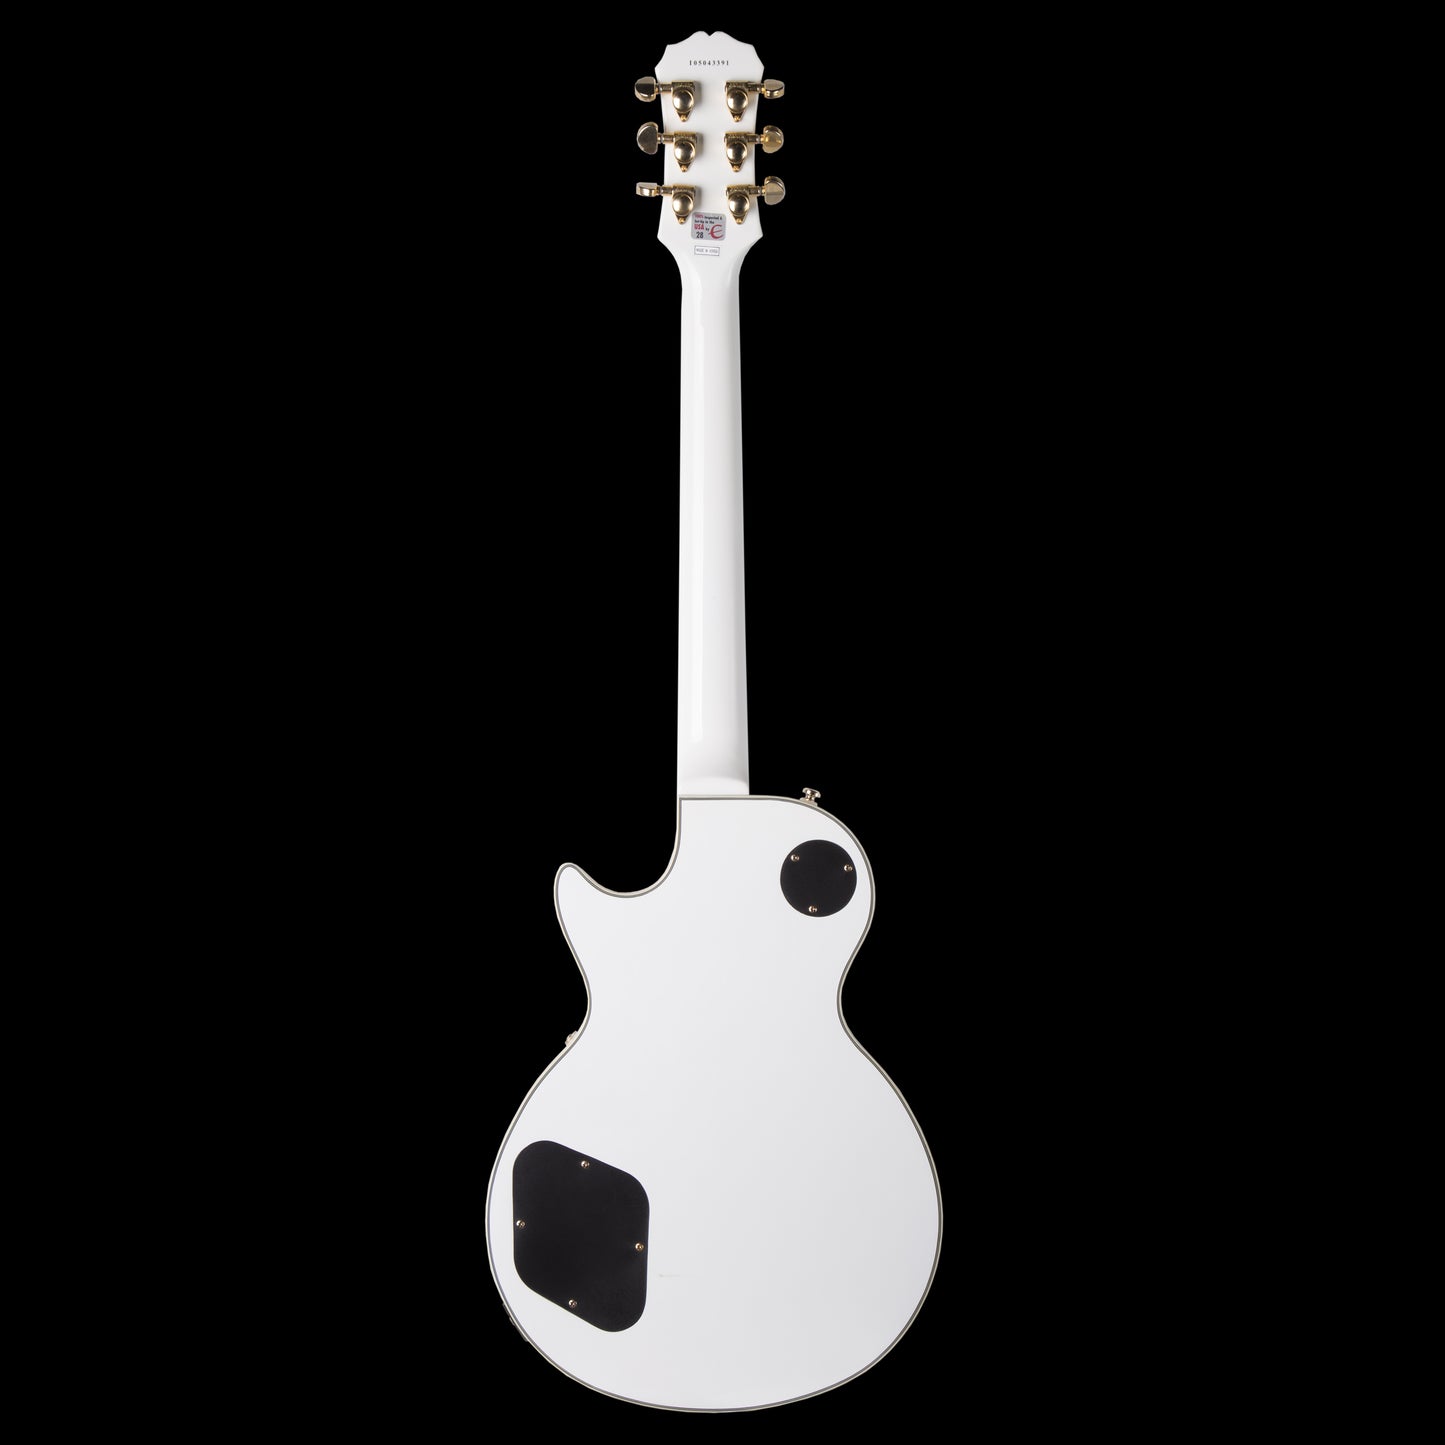 Epiphone Les Paul Custom White Electric Guitar (A6080)